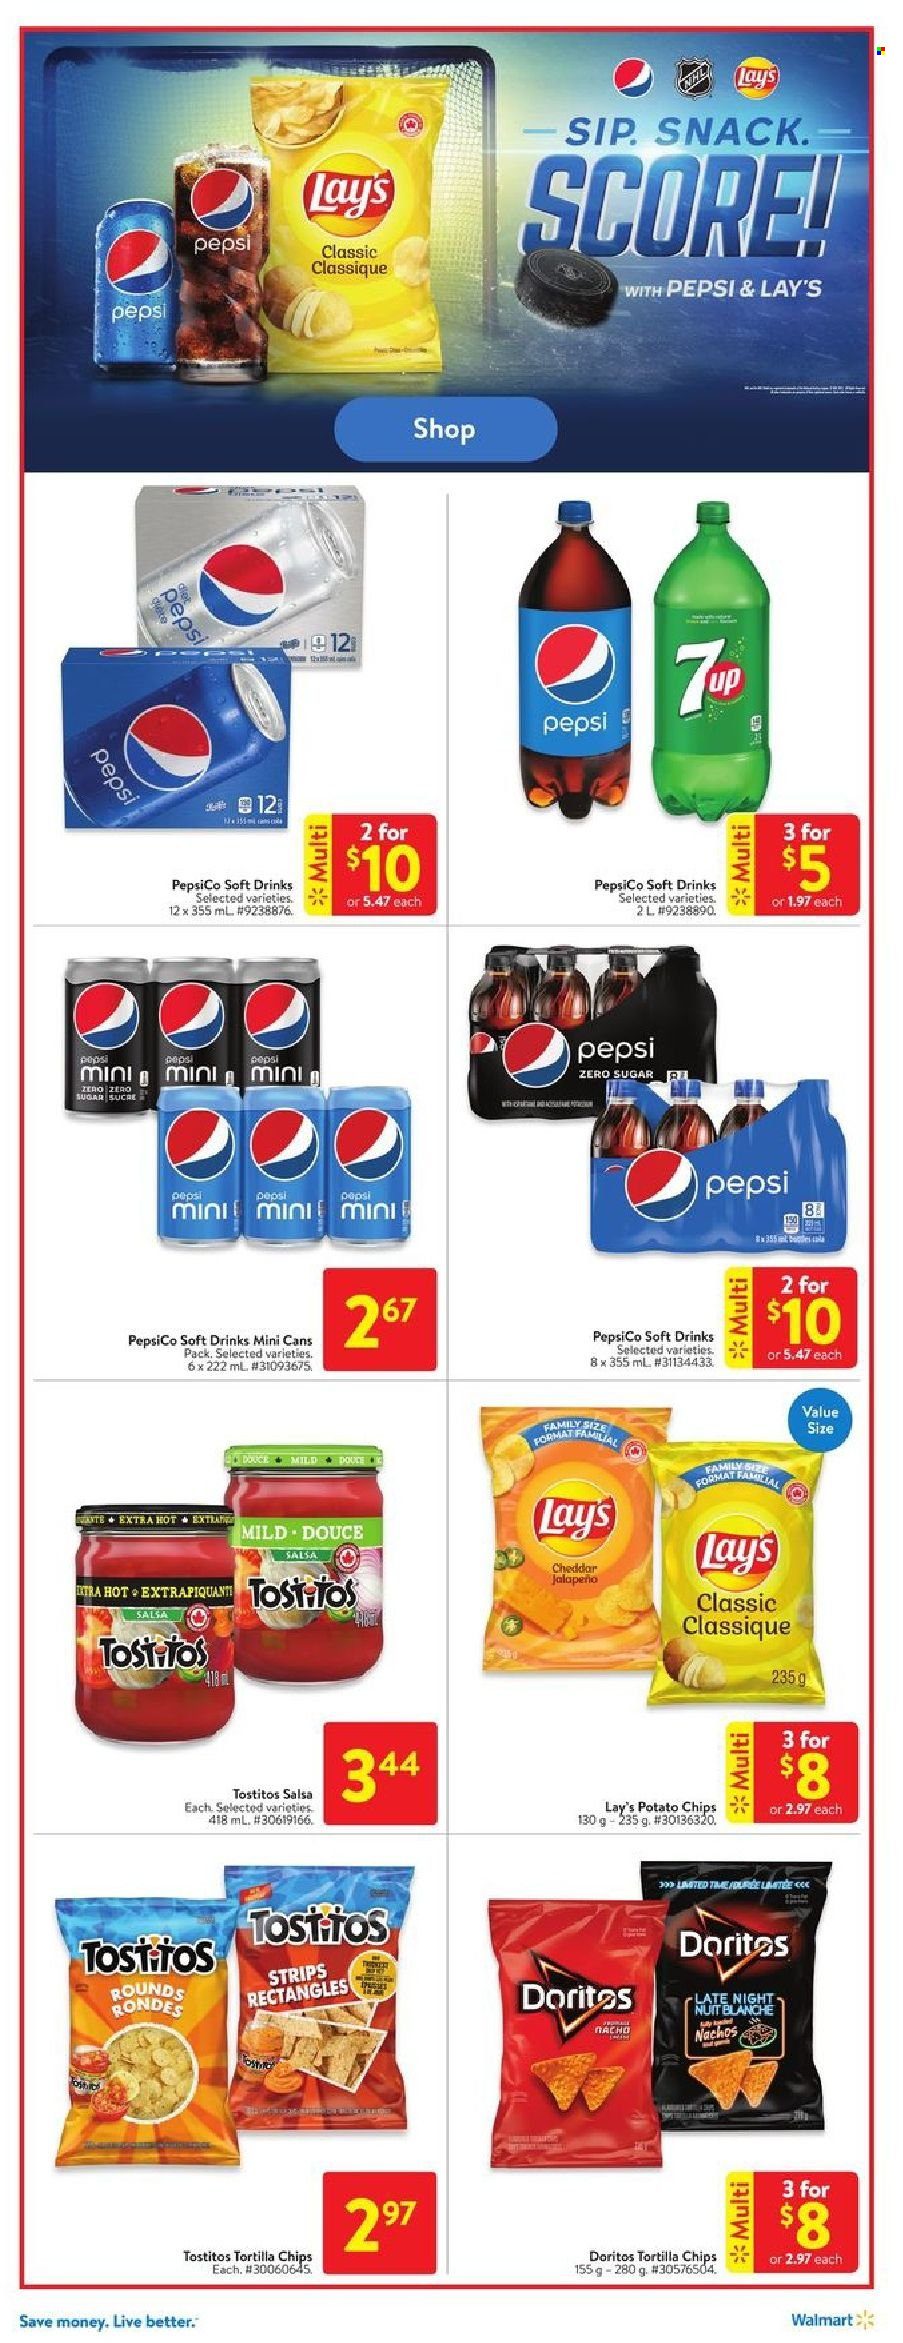 thumbnail - Circulaire Walmart - 14 Octobre 2021 - 20 Octobre 2021 - Produits soldés - chips, tortilla chips, Lay’s, Pepsi. Page 6.